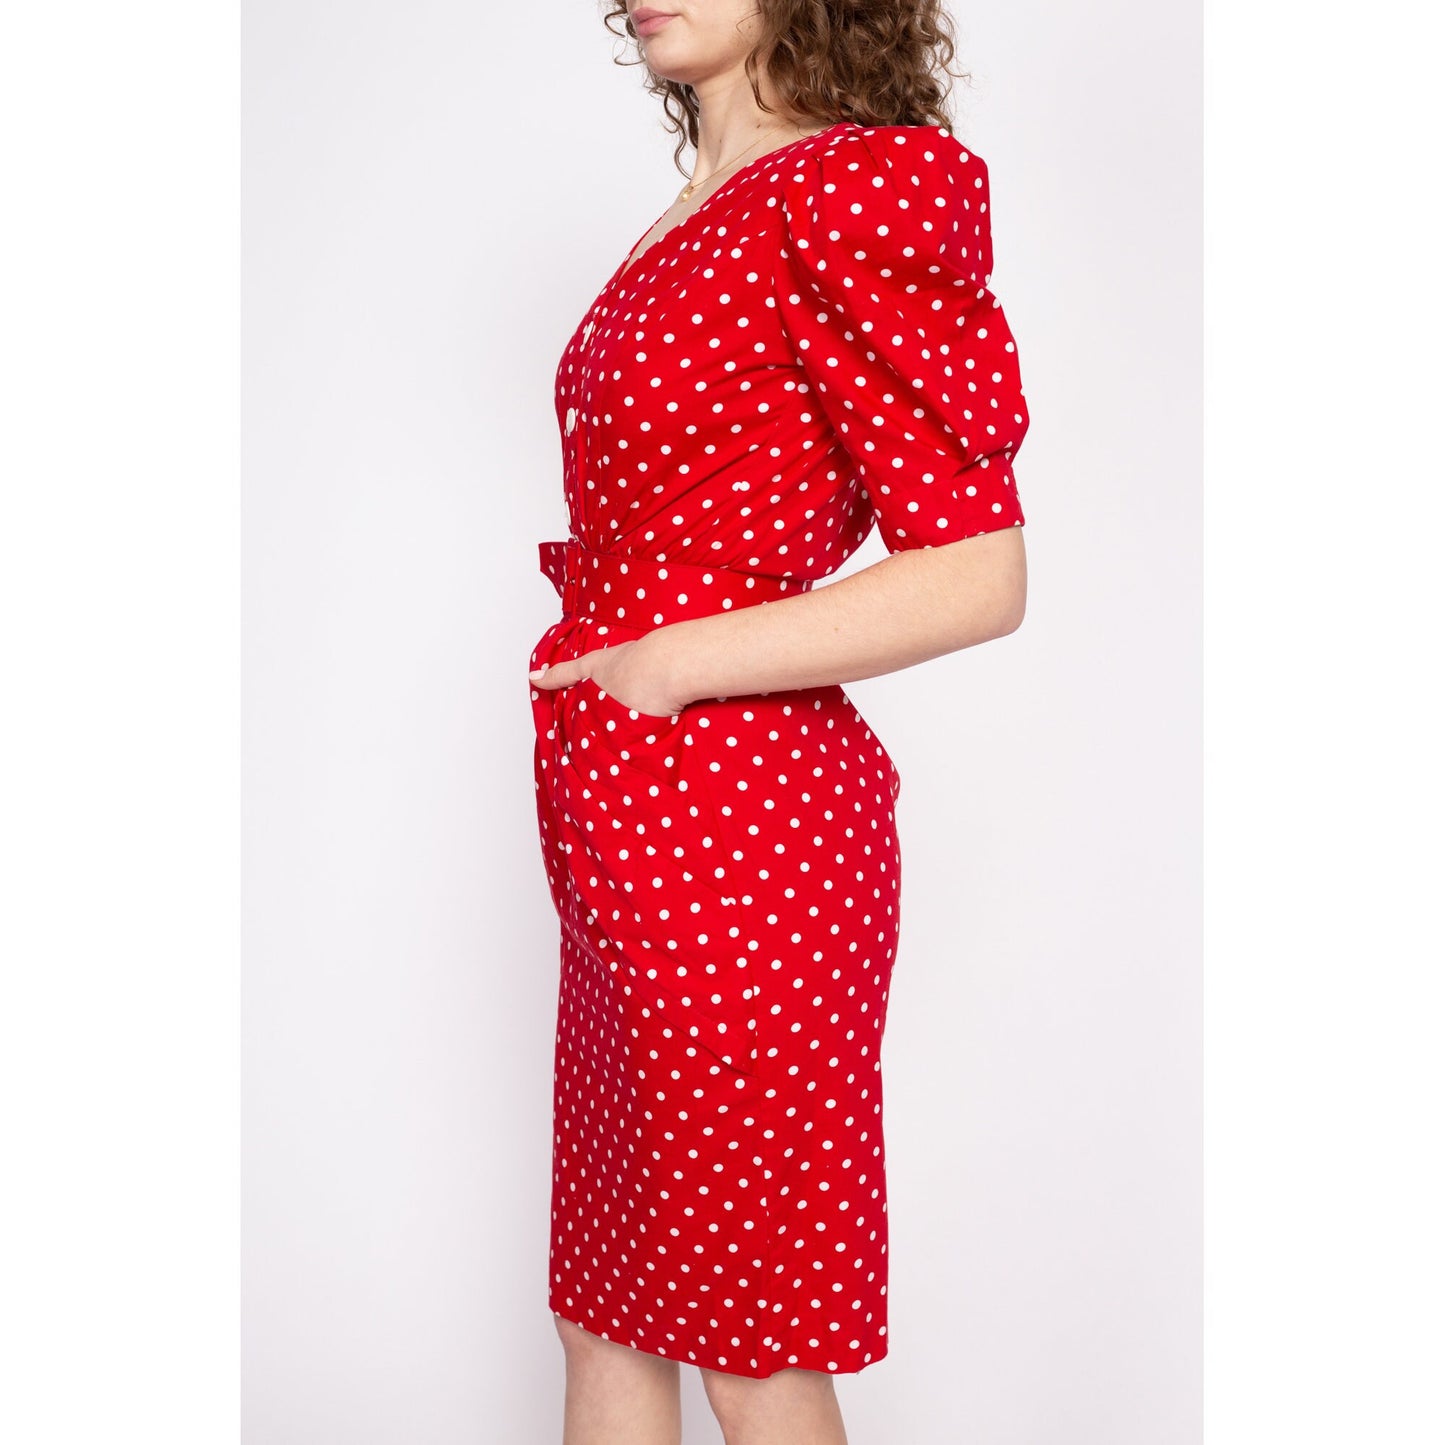 80s Choon Red Polka Dot Ladybug Pocket Dress - Small to Medium